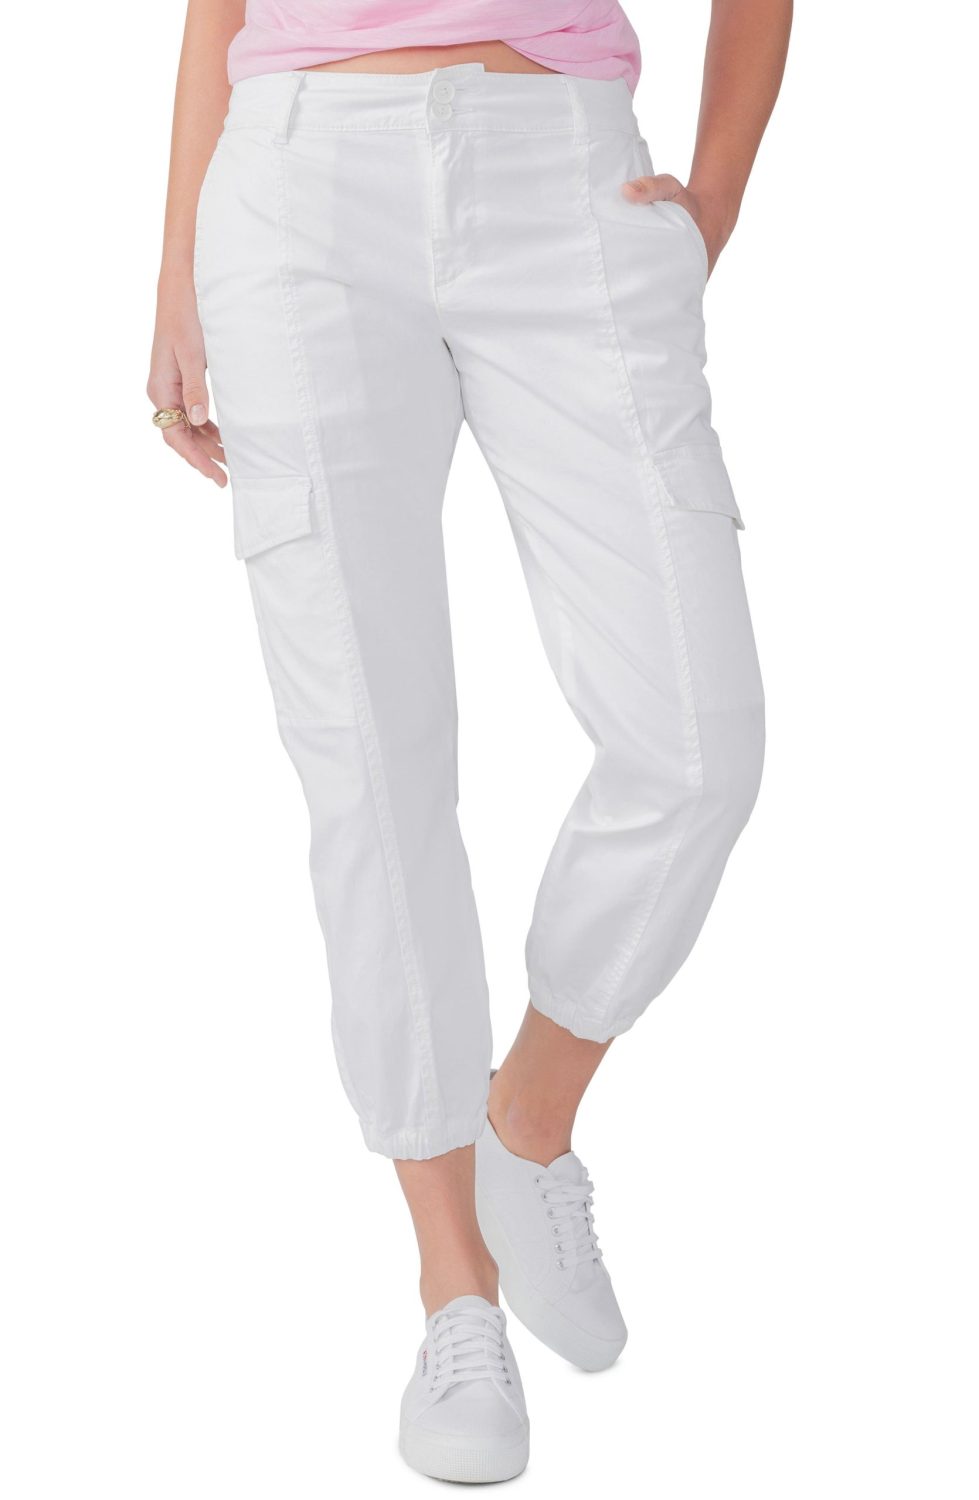 Women white pants, Shorts & Skirts on Sale at Athleta缩略图